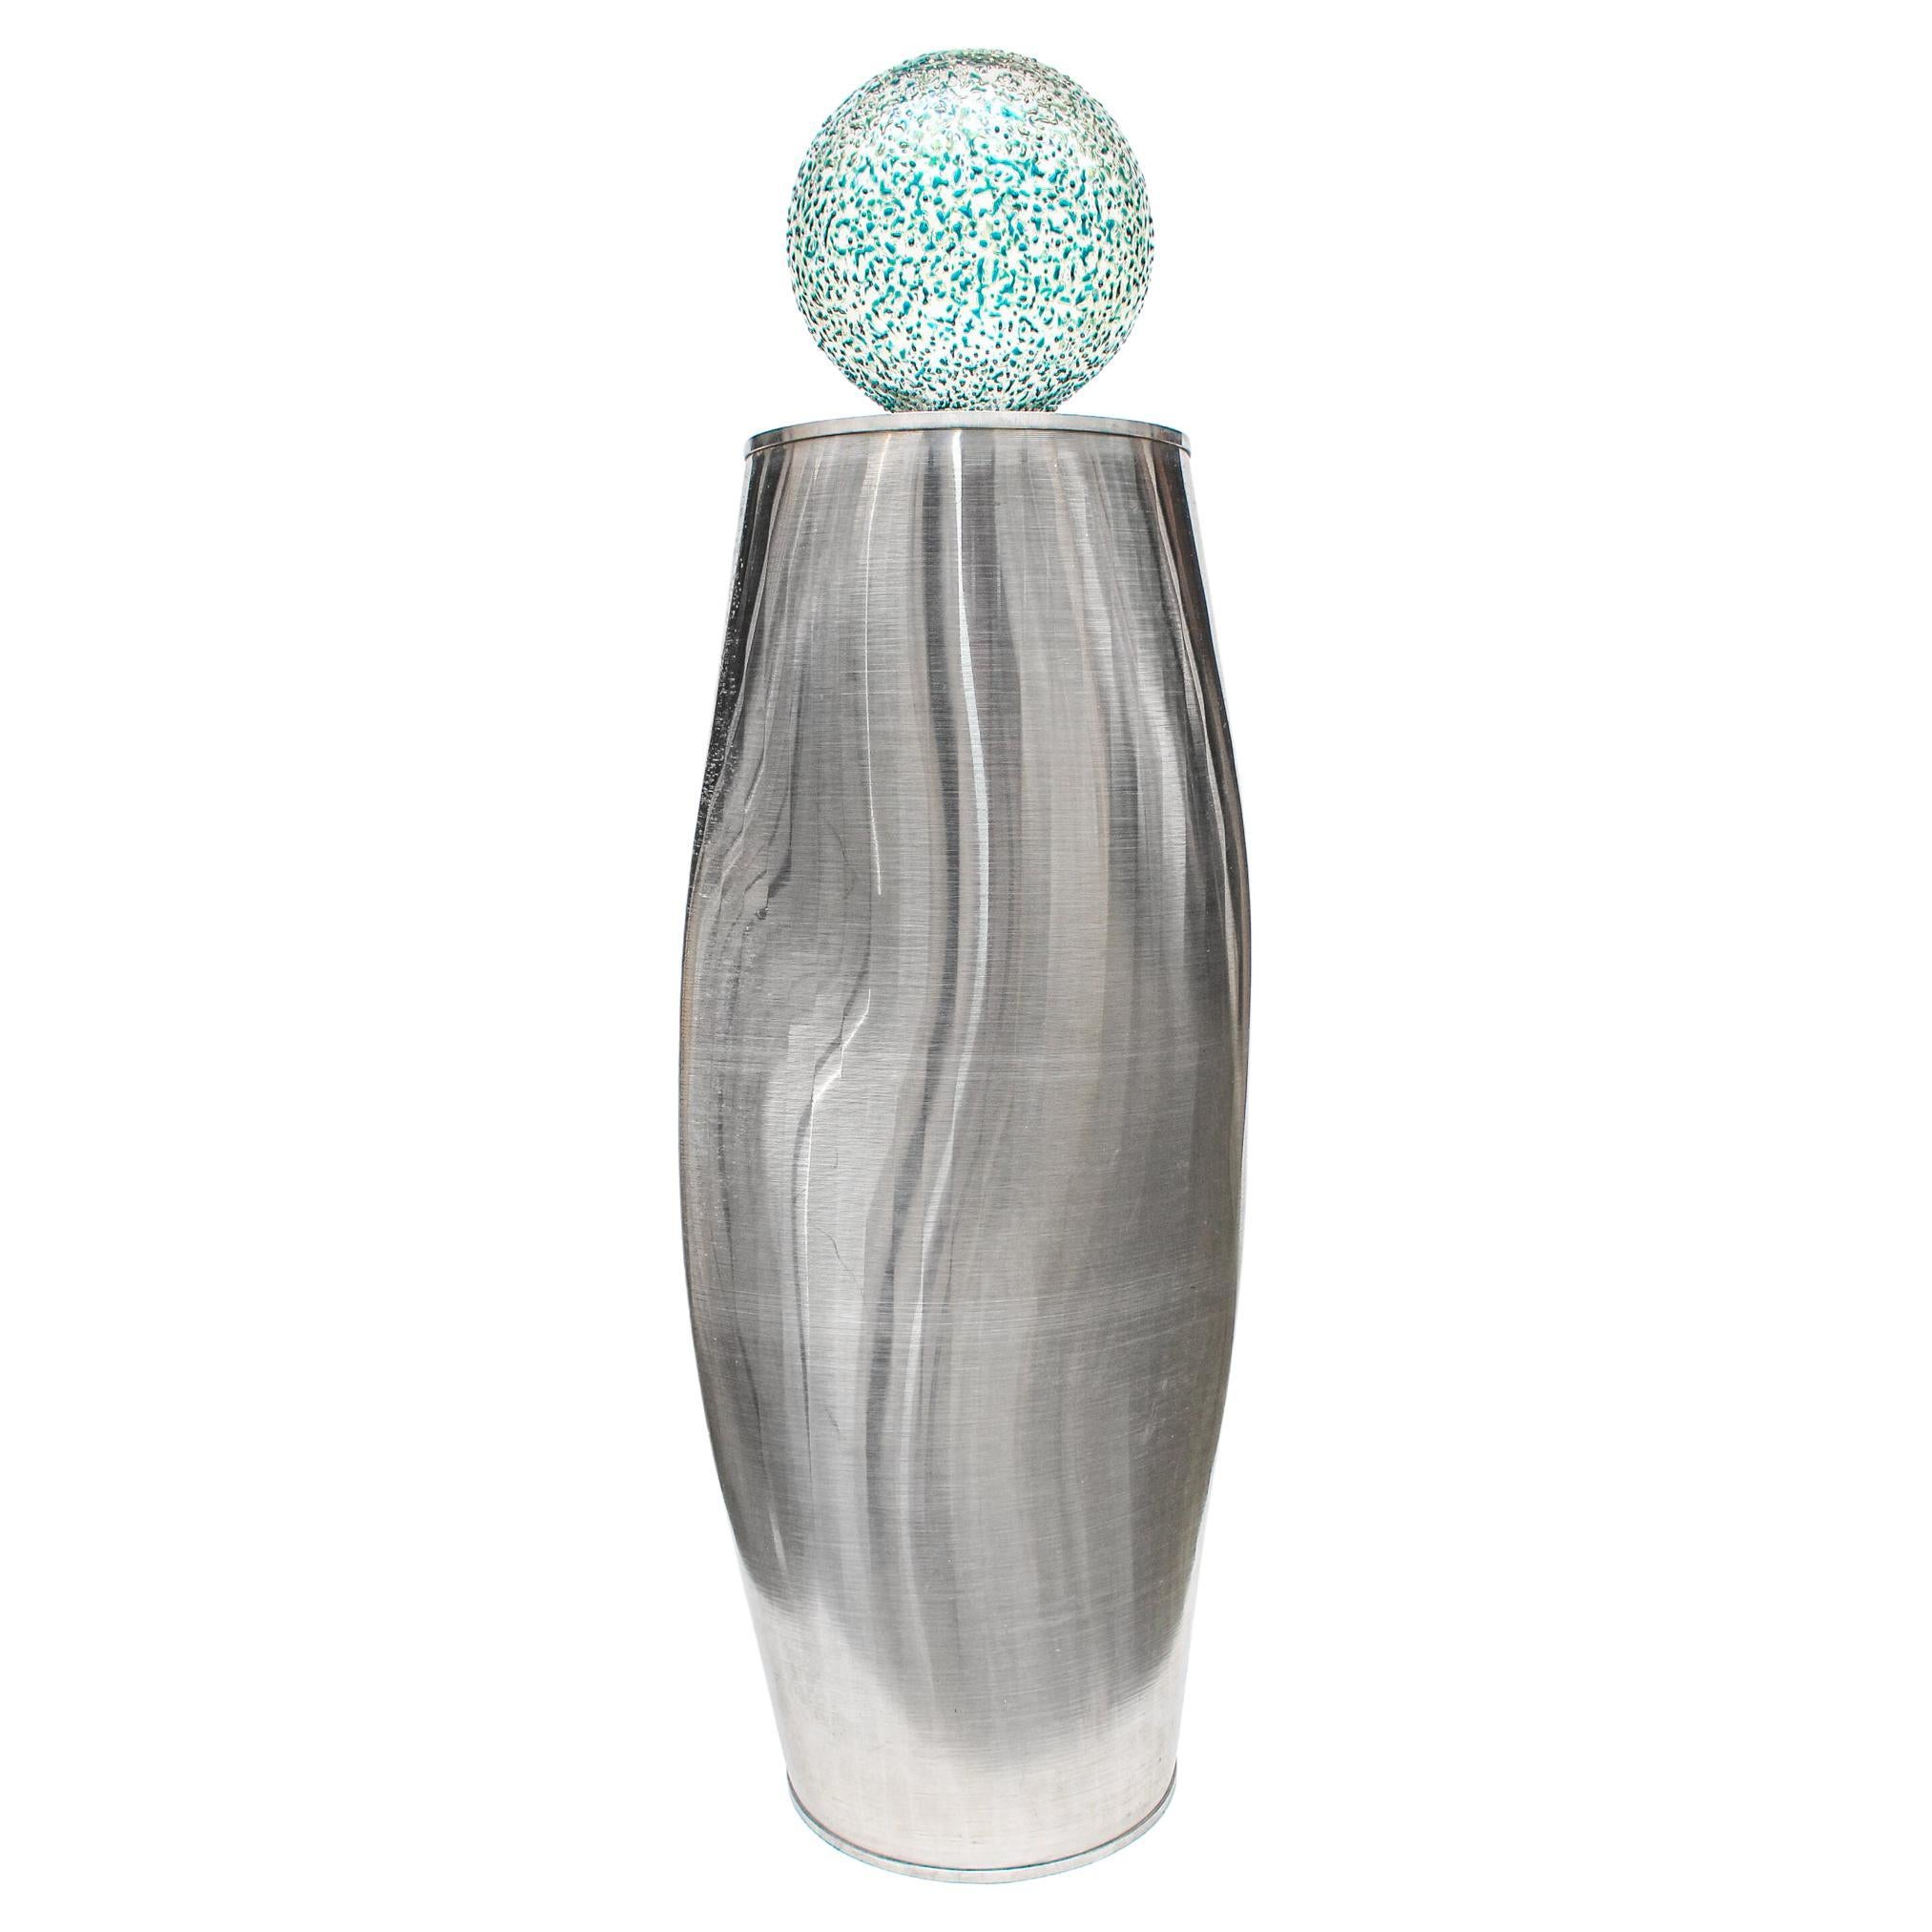 Sculptural Industrial Aluminium Silver Filter with a Hand-Blown Glass Ball Top